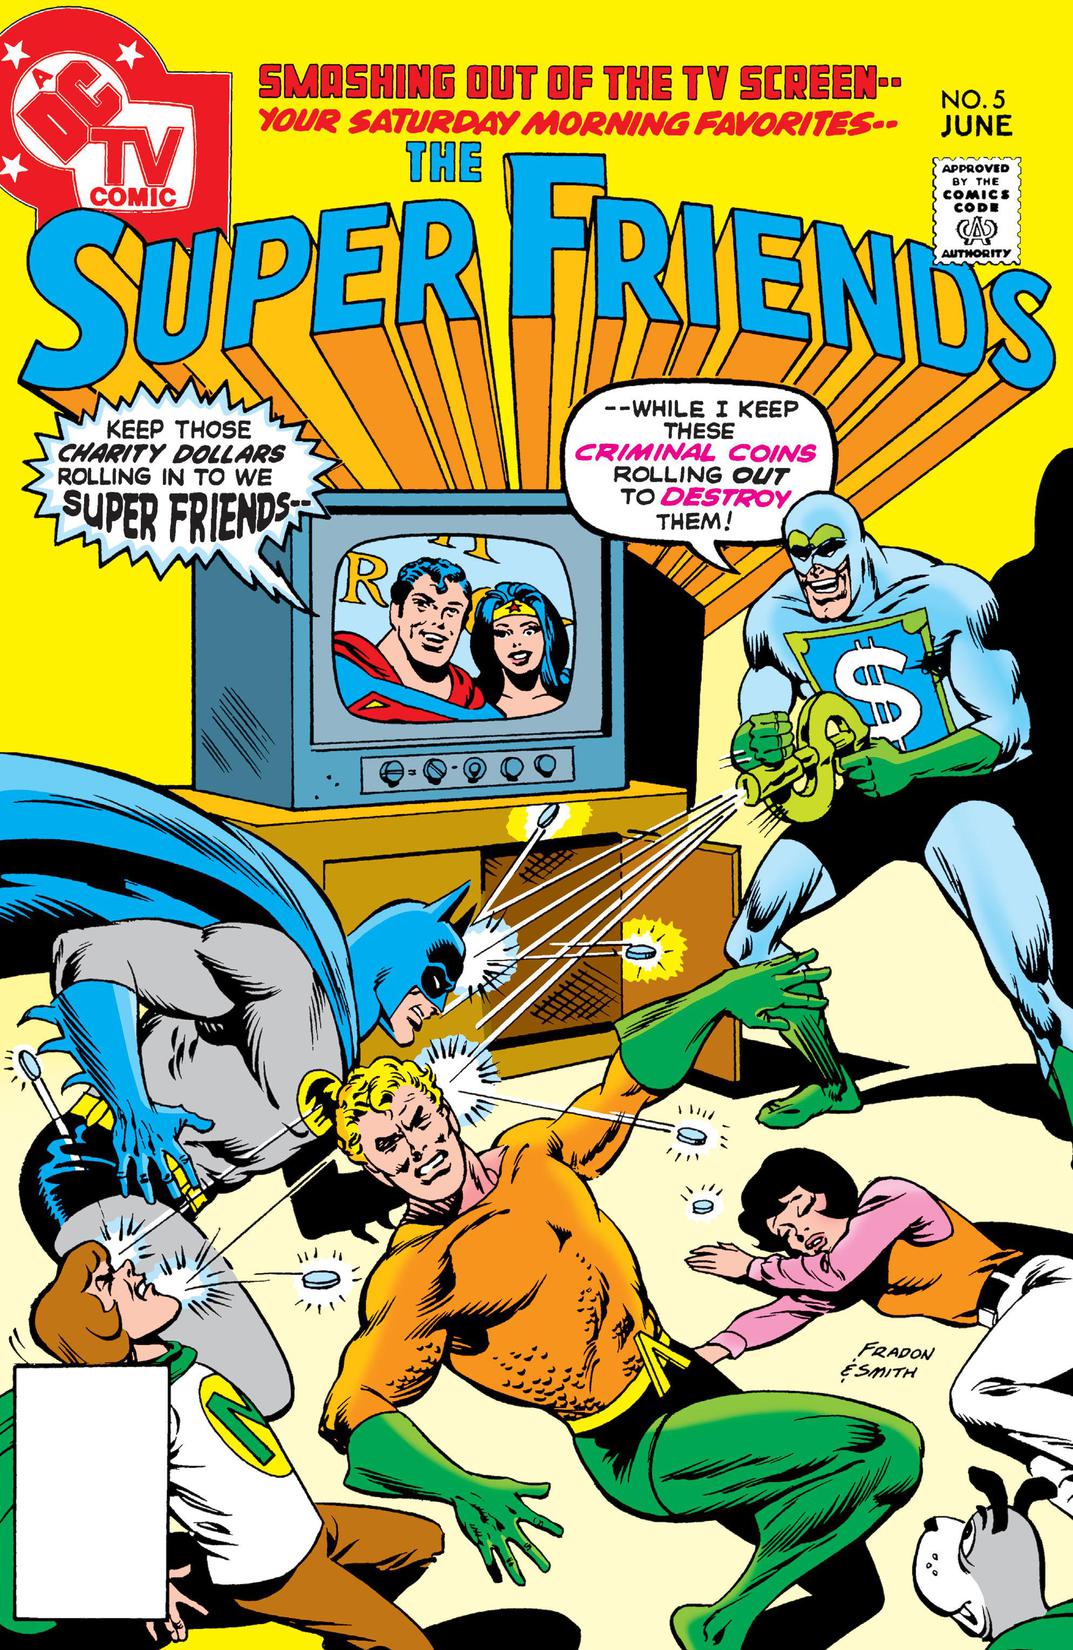 Super Friends (1976-) #5 preview images